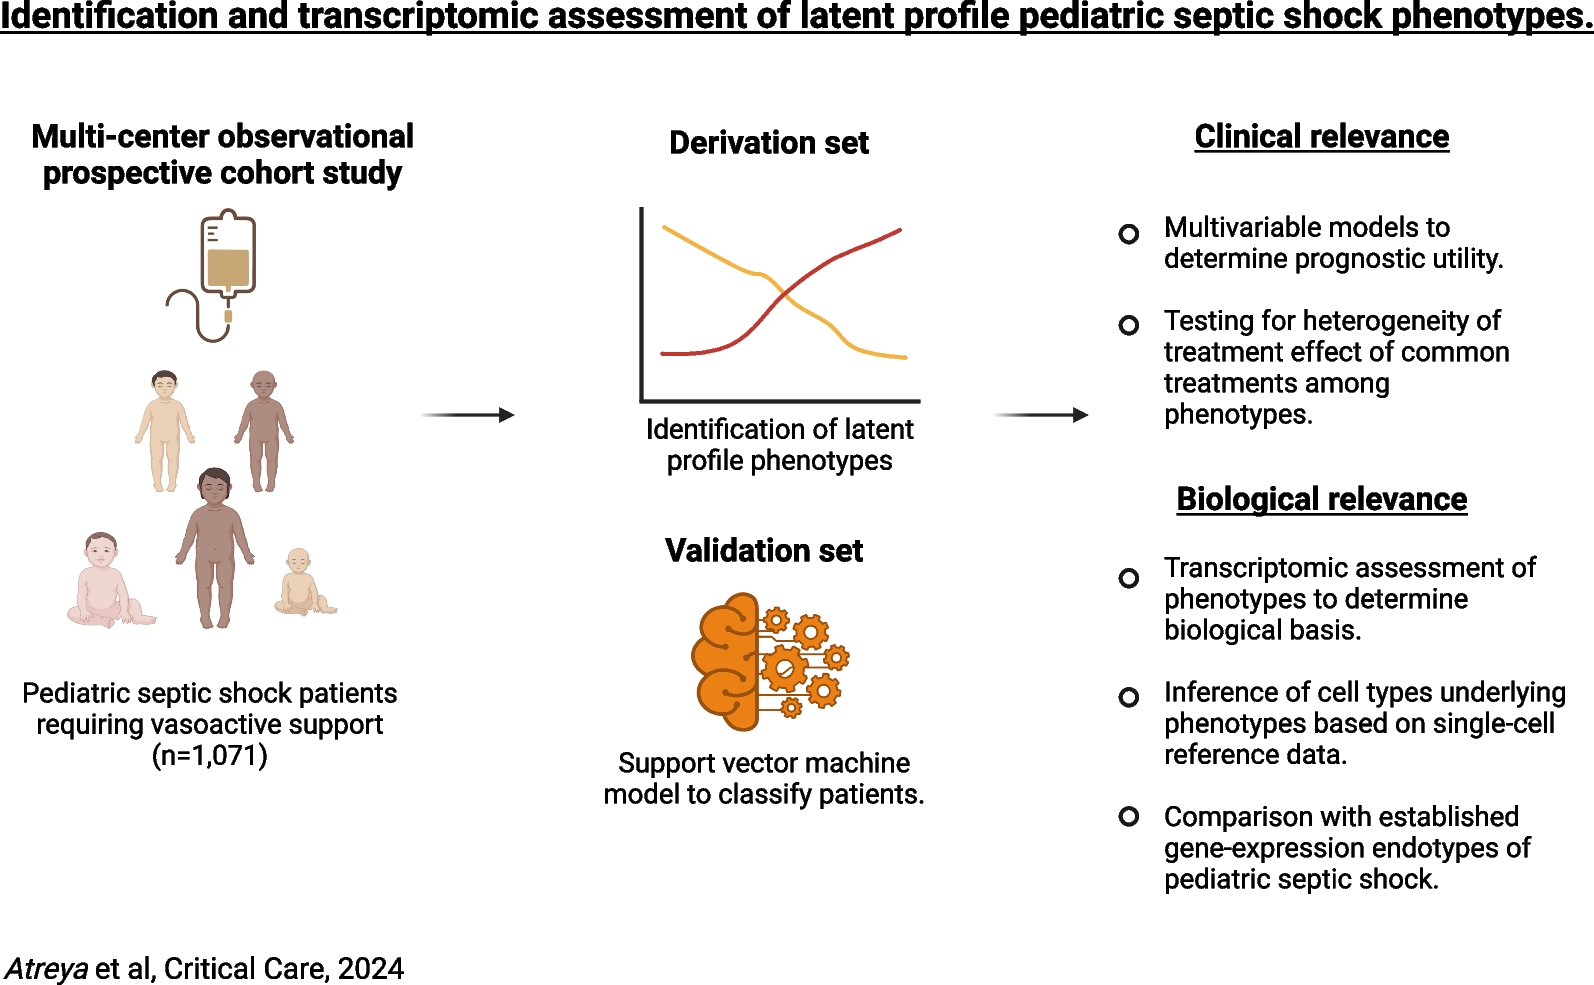 Identification and transcriptomic assessment of latent profile pediatric septic shock phenotypes